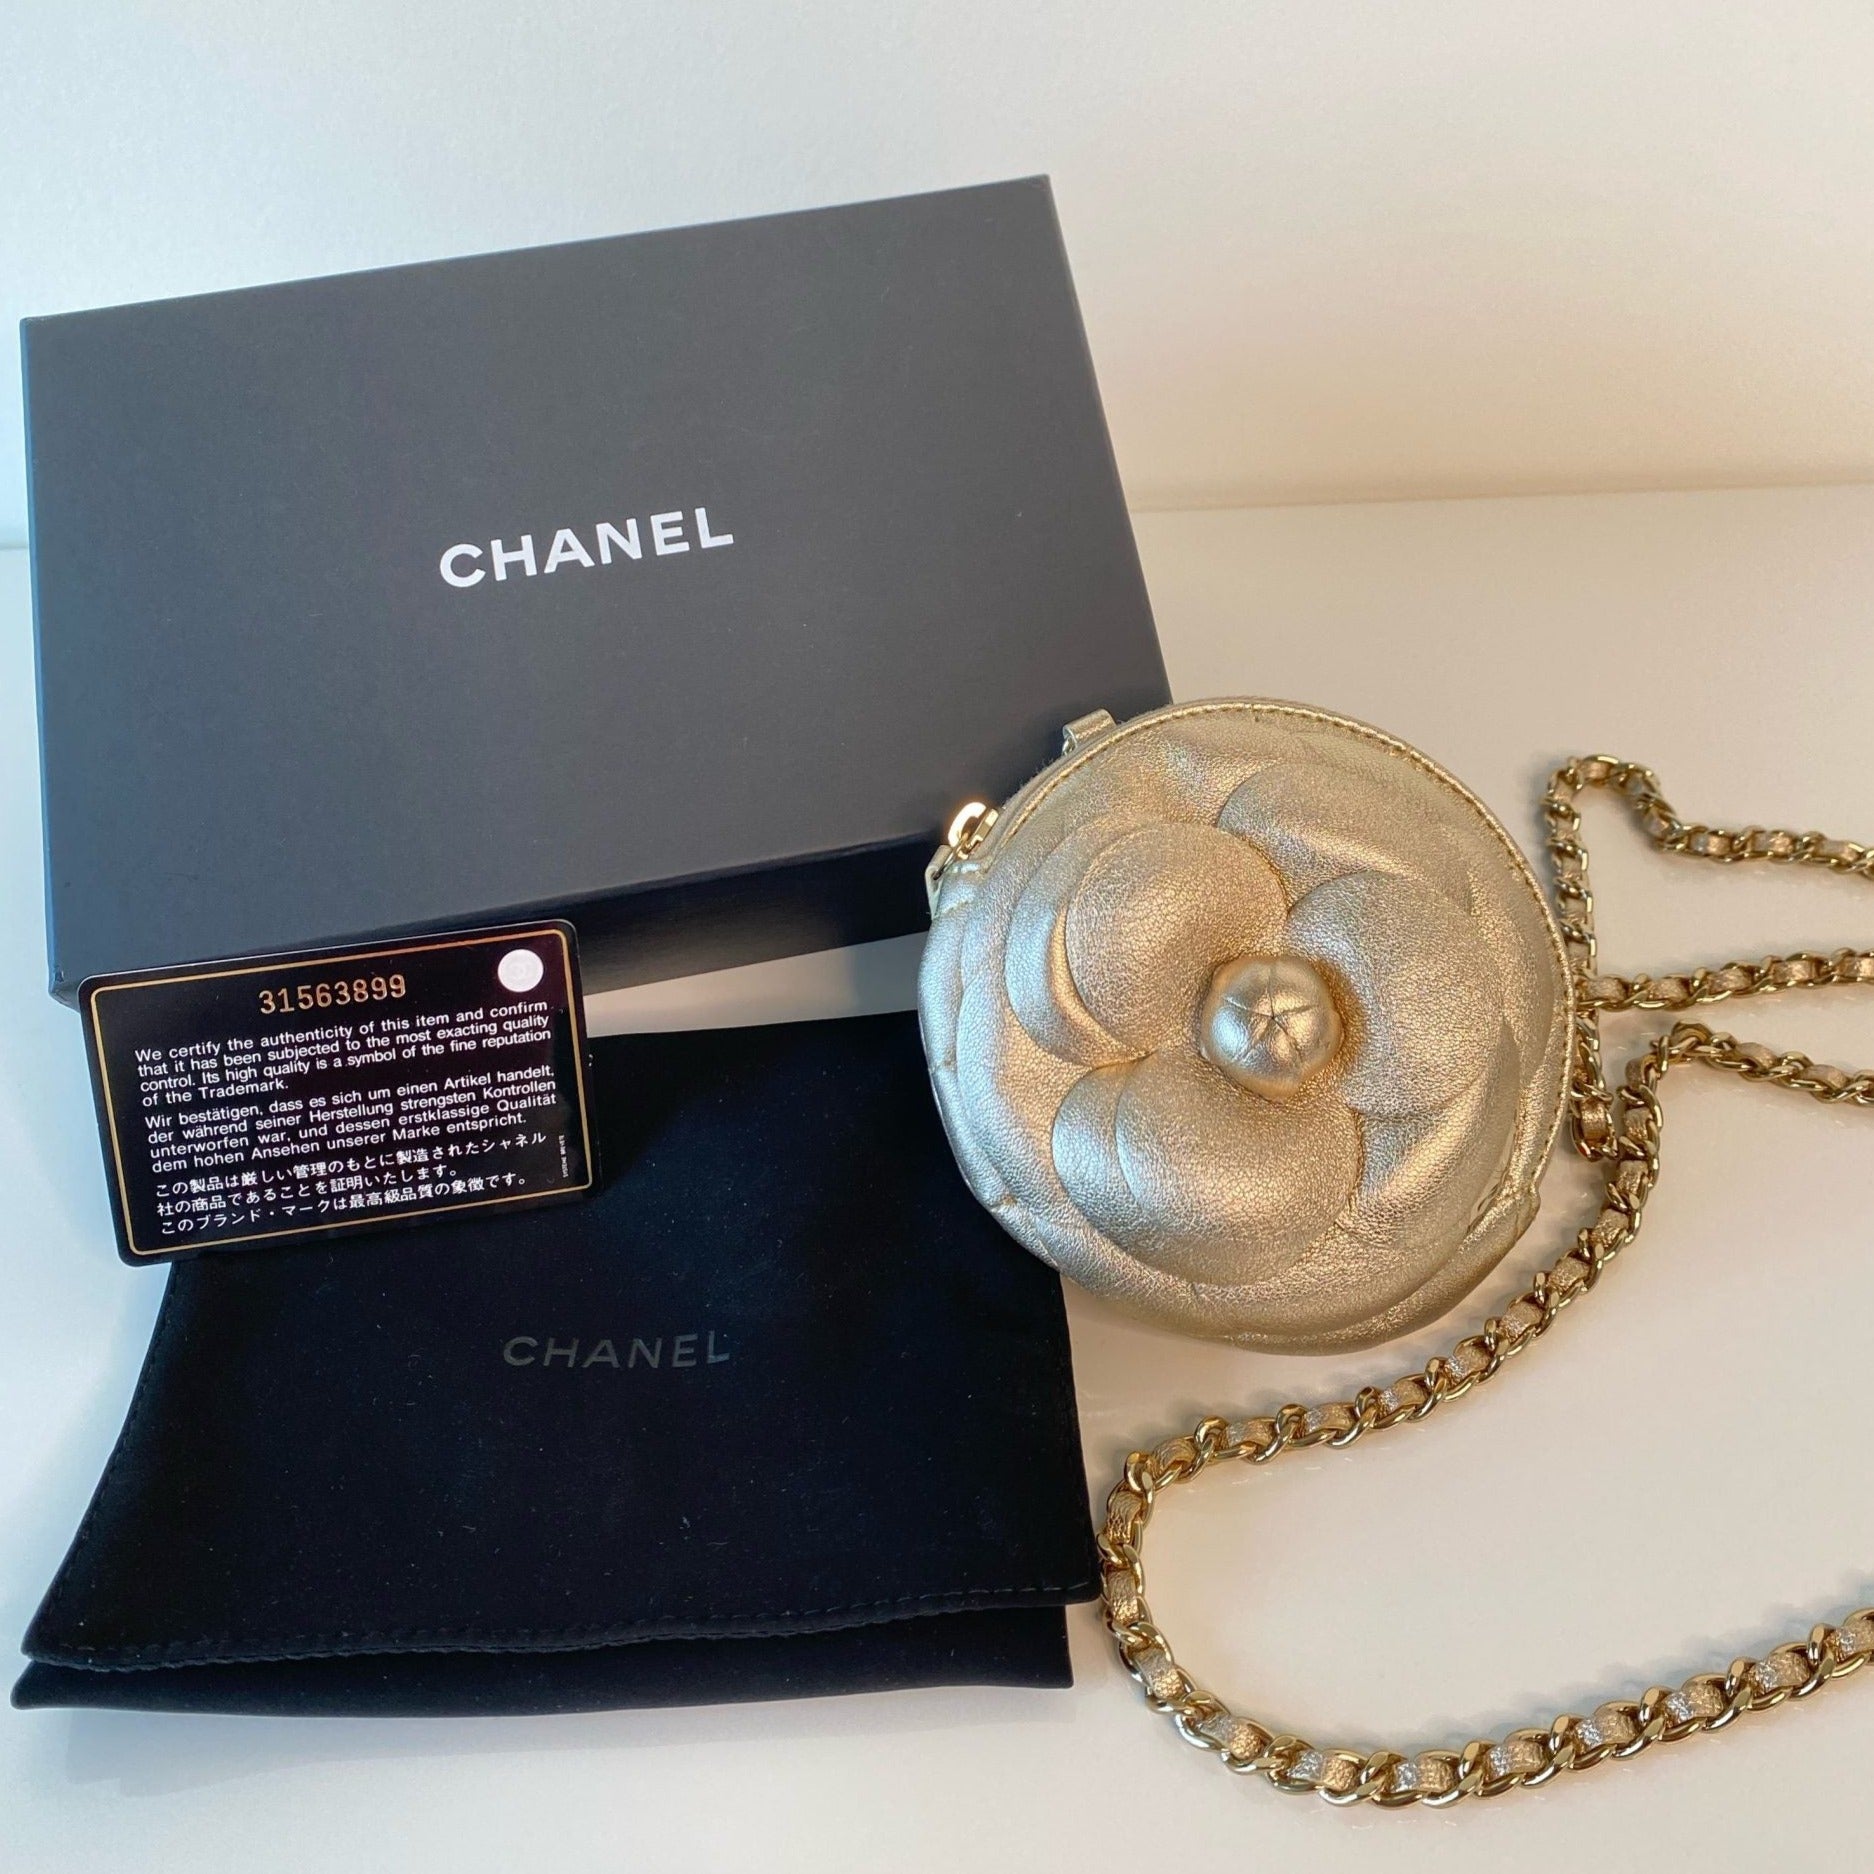 Chanel Heart on chain necklace blue lambskin